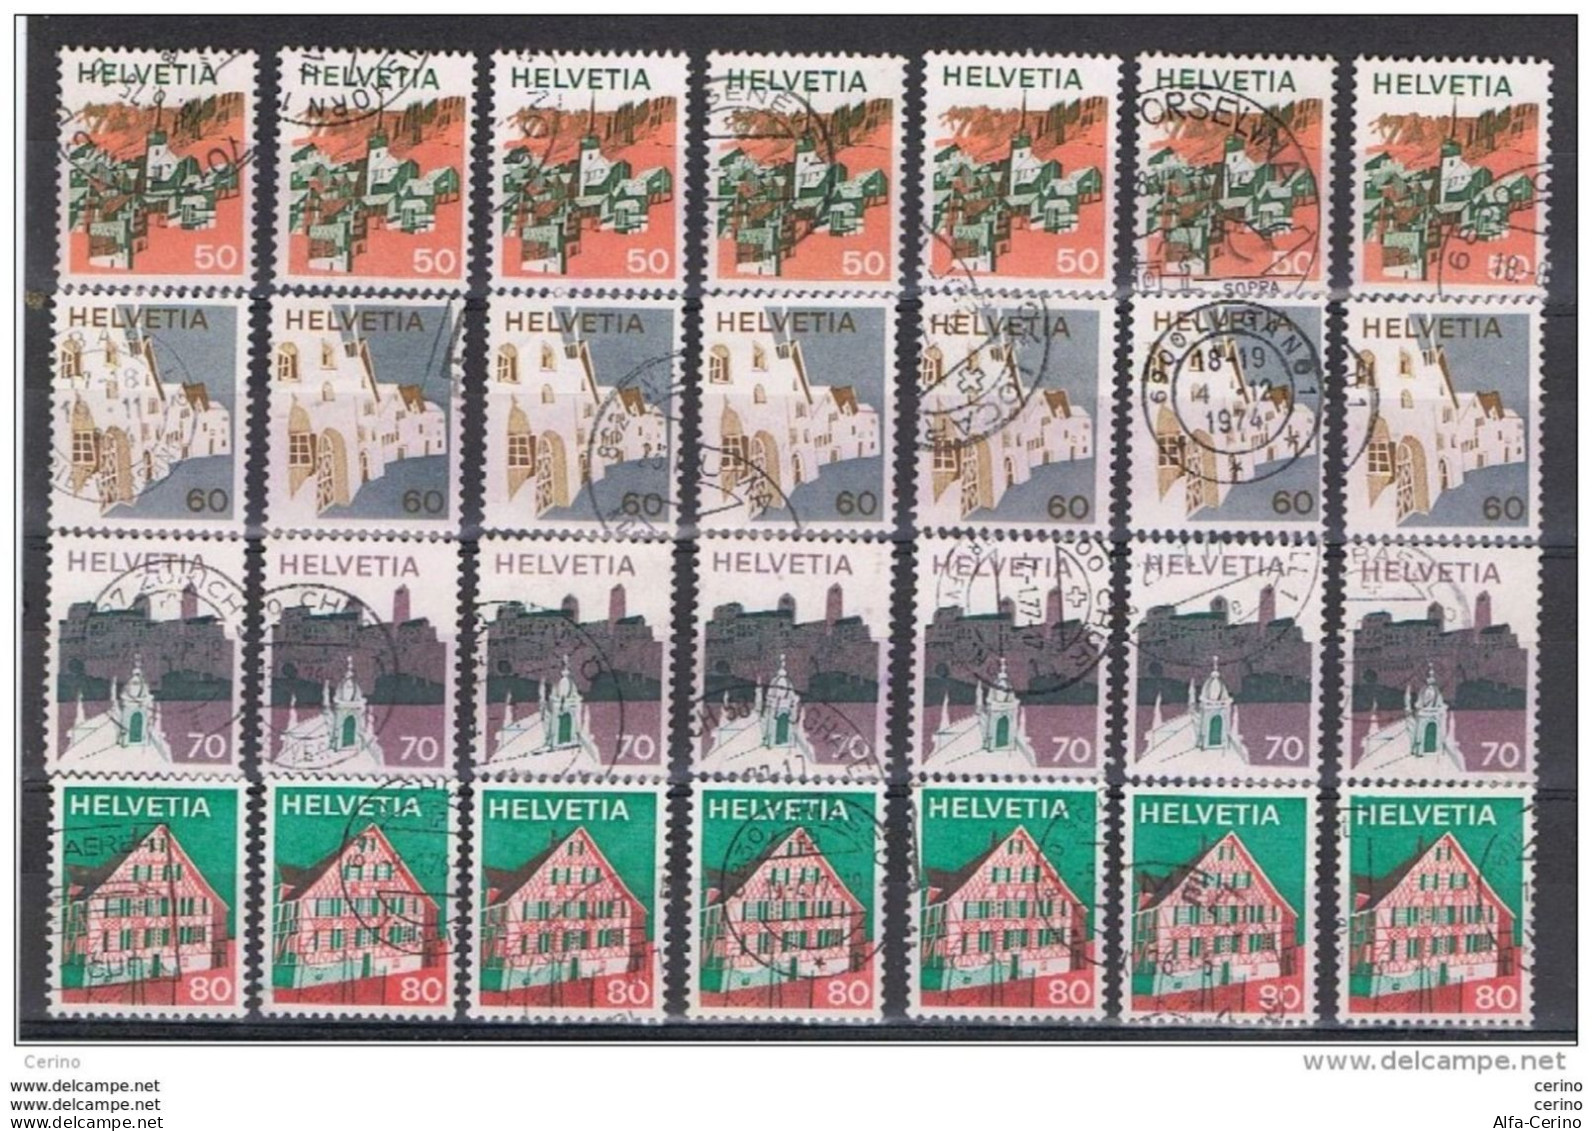 SVIZZERA:  1973  DEFINITIVA  -  4  VAL. US. -  RIPETUTI  7  VOLTE  -  YV/TELL. 939/42 - Used Stamps